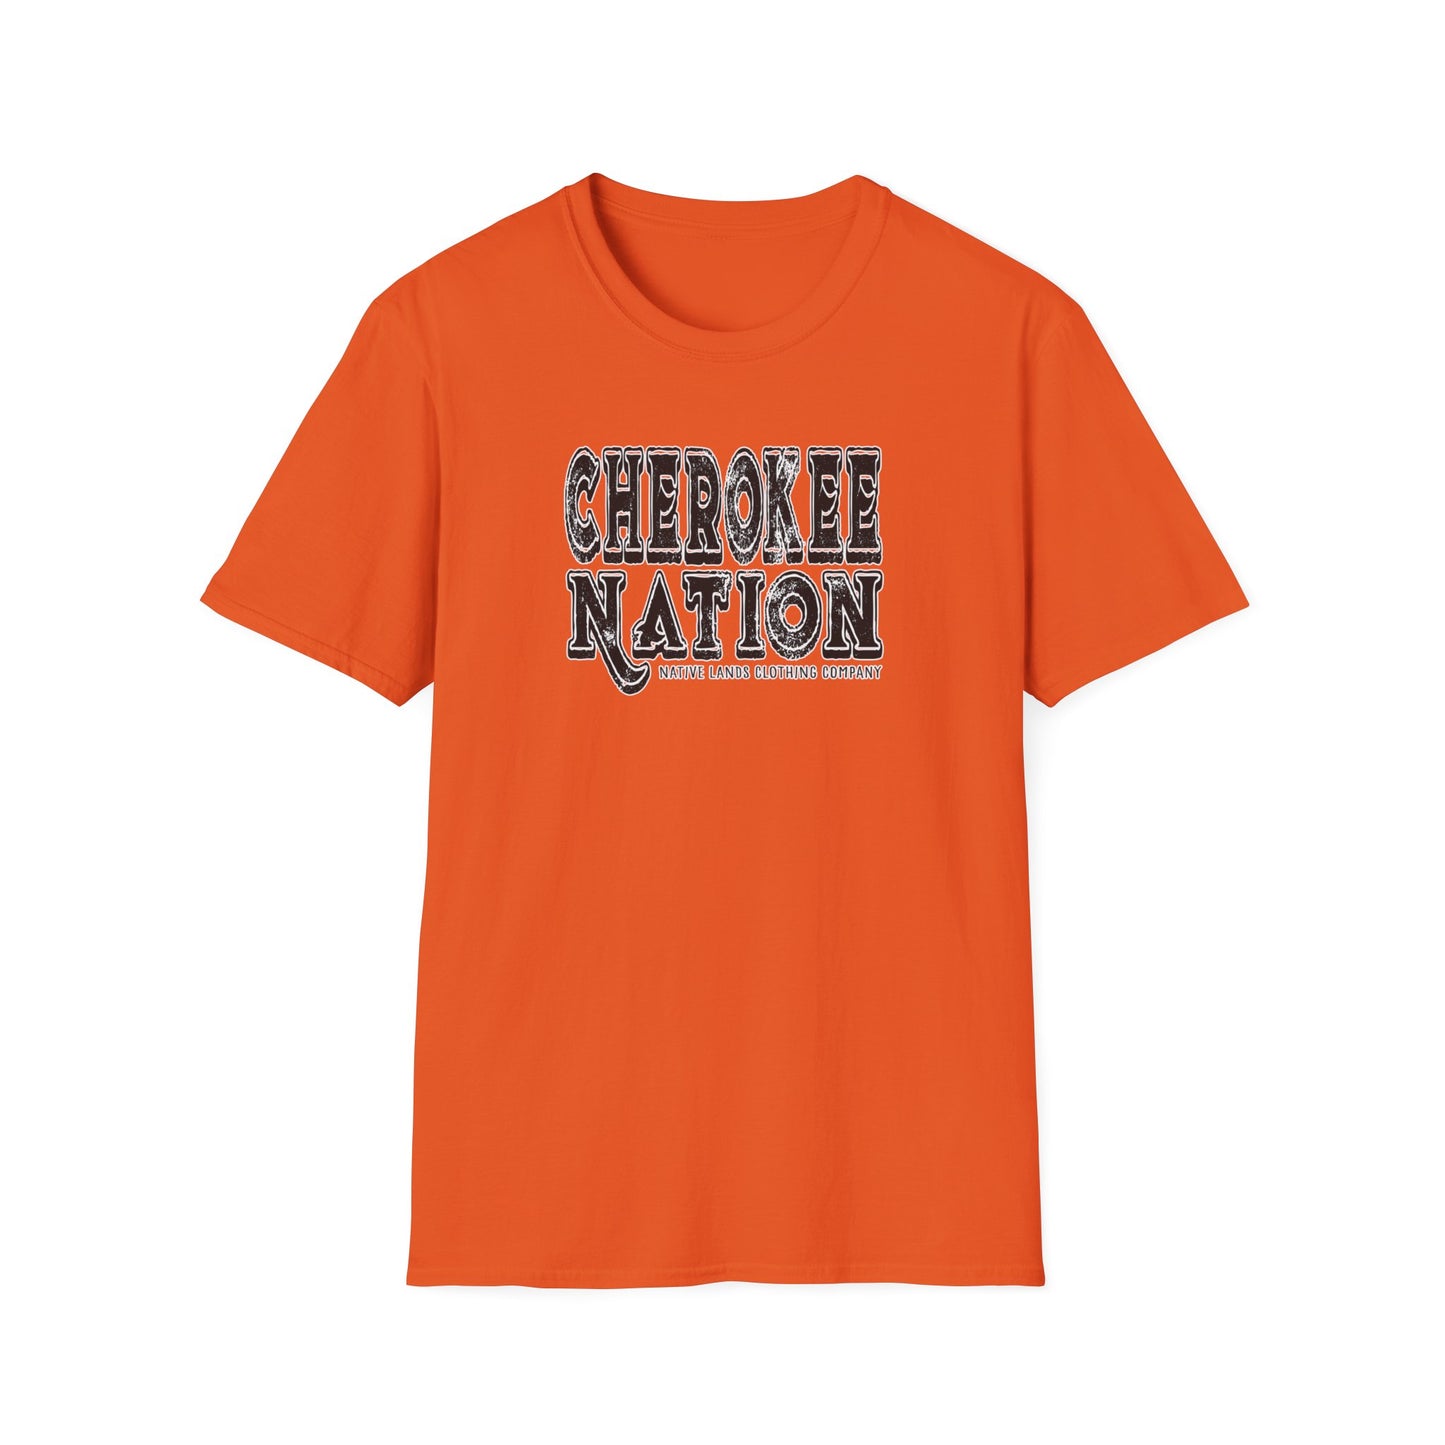 Cherokee Nation Shirt Cotton - Premières Nations, Autochtones canadiens, Autochtones, Amérindiens